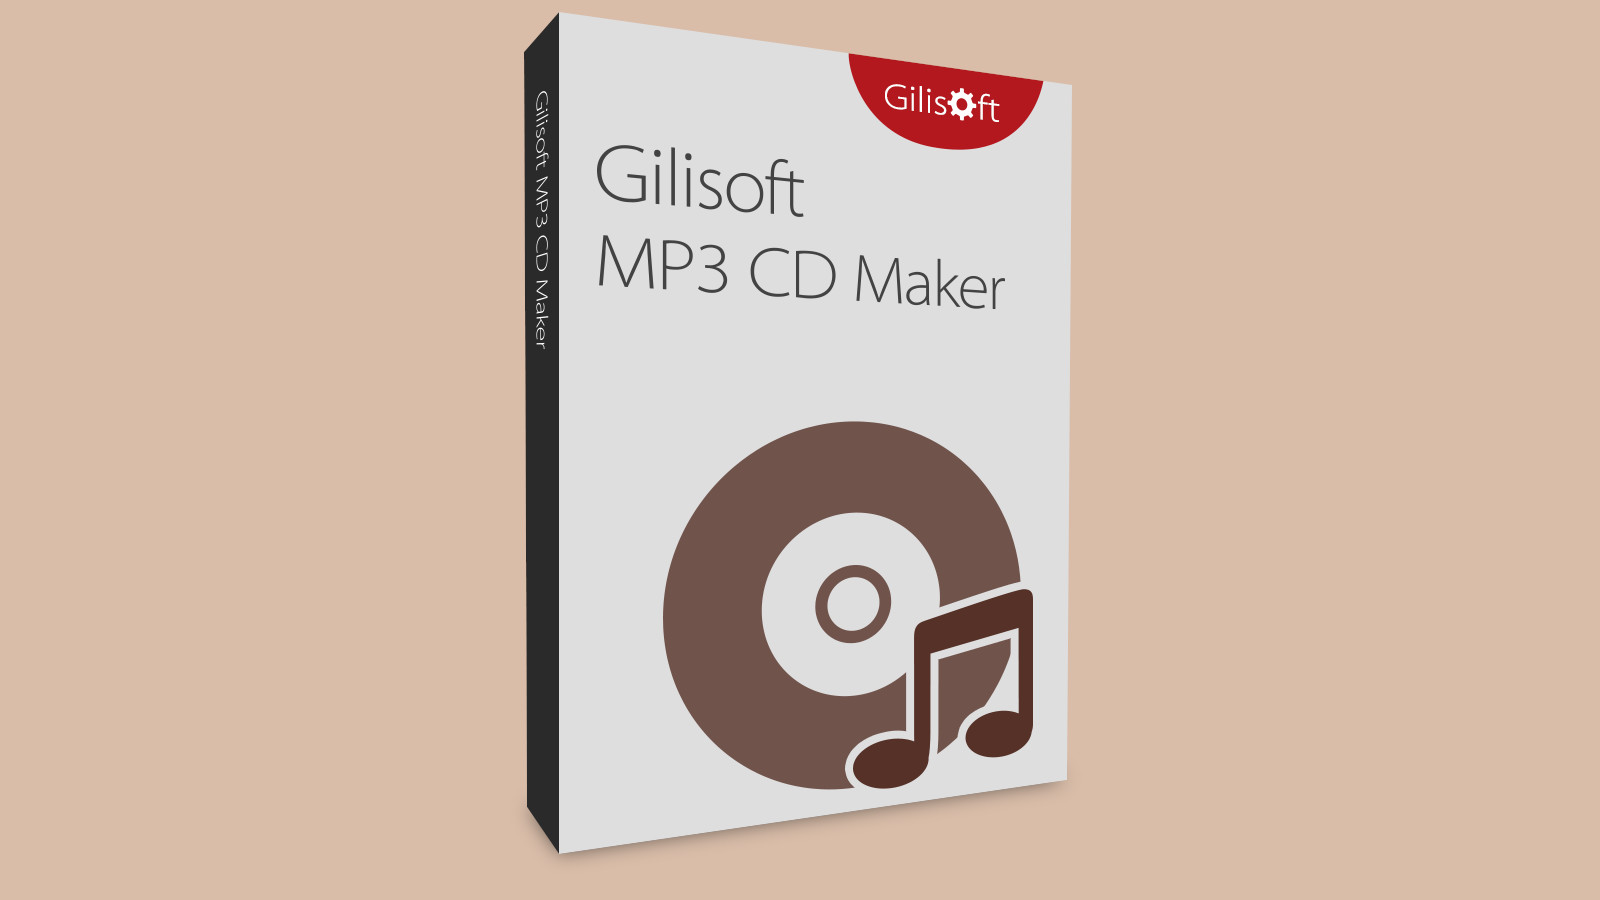 Gilisoft MP3 CD Maker CD Key 5.65$